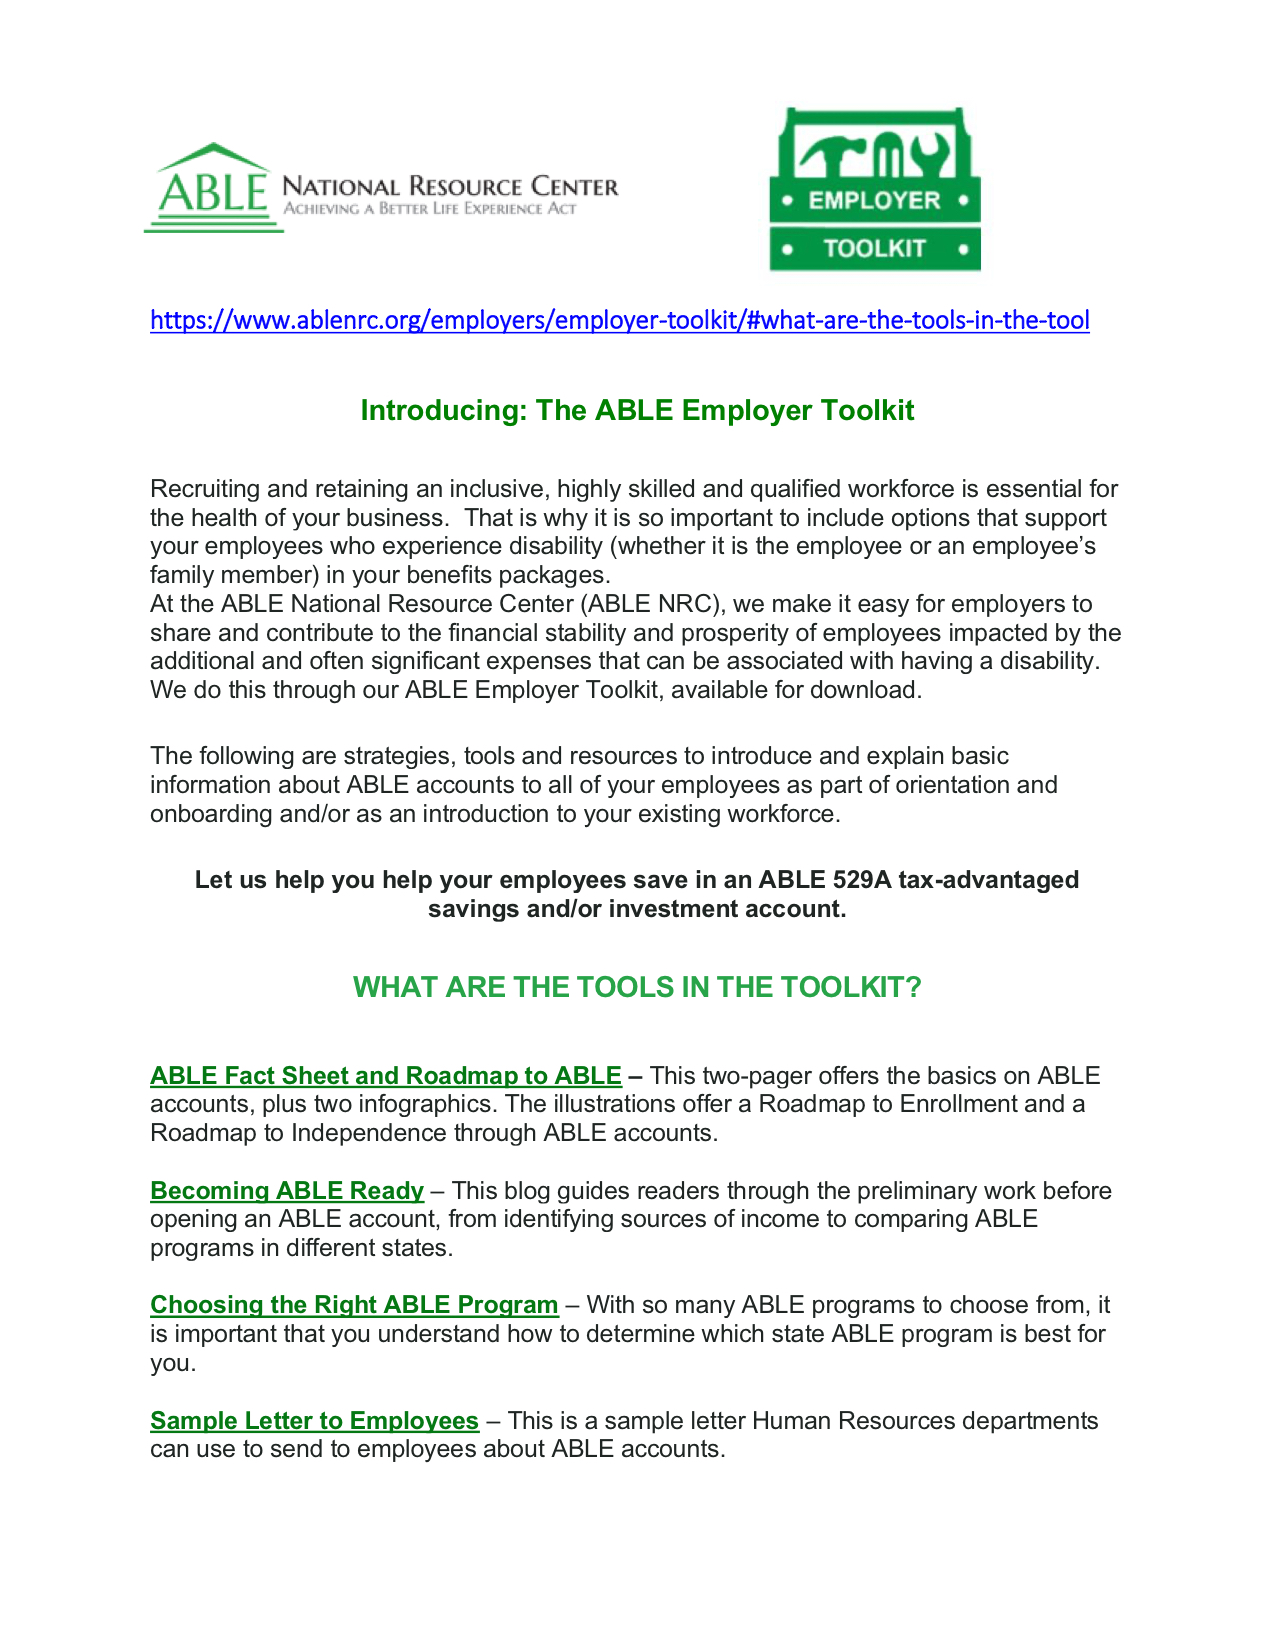 ABLE Employer Tool Kit Summary 2020